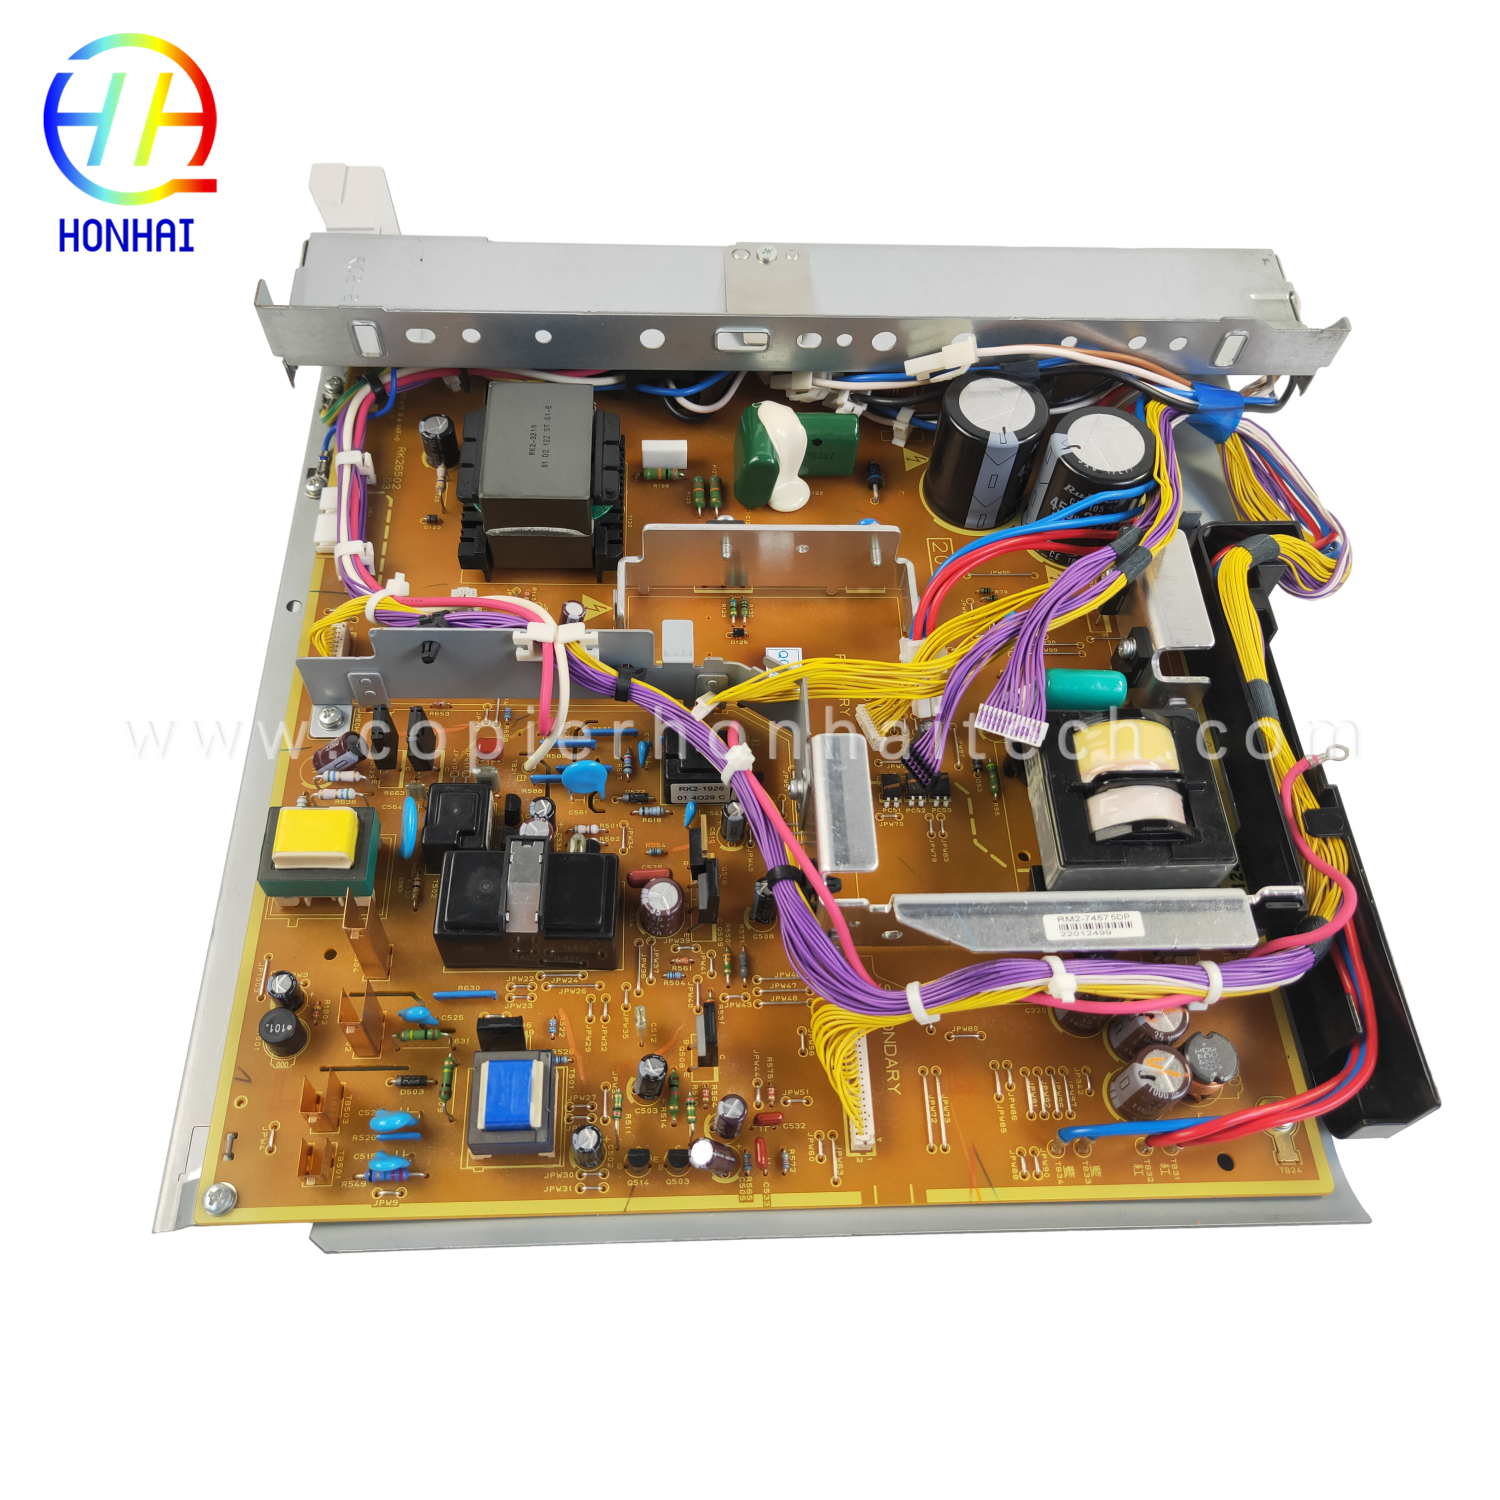 https://www.copierhonhaitech.com/high-điện áp-power-supply-220v-for-hp-laserjet-m630-rm2-5827-000-product/